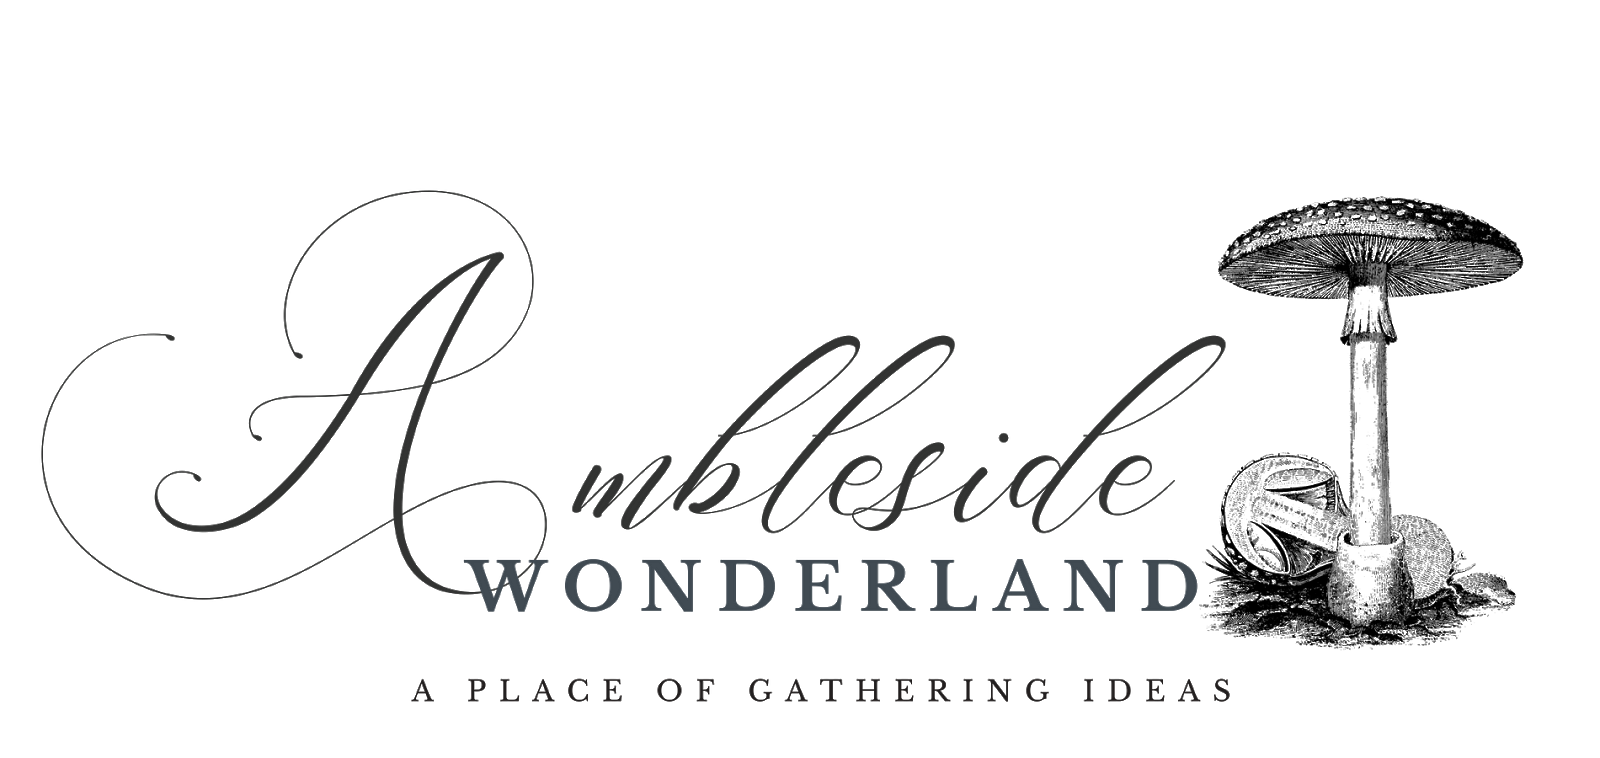 Ambleside Wonderland